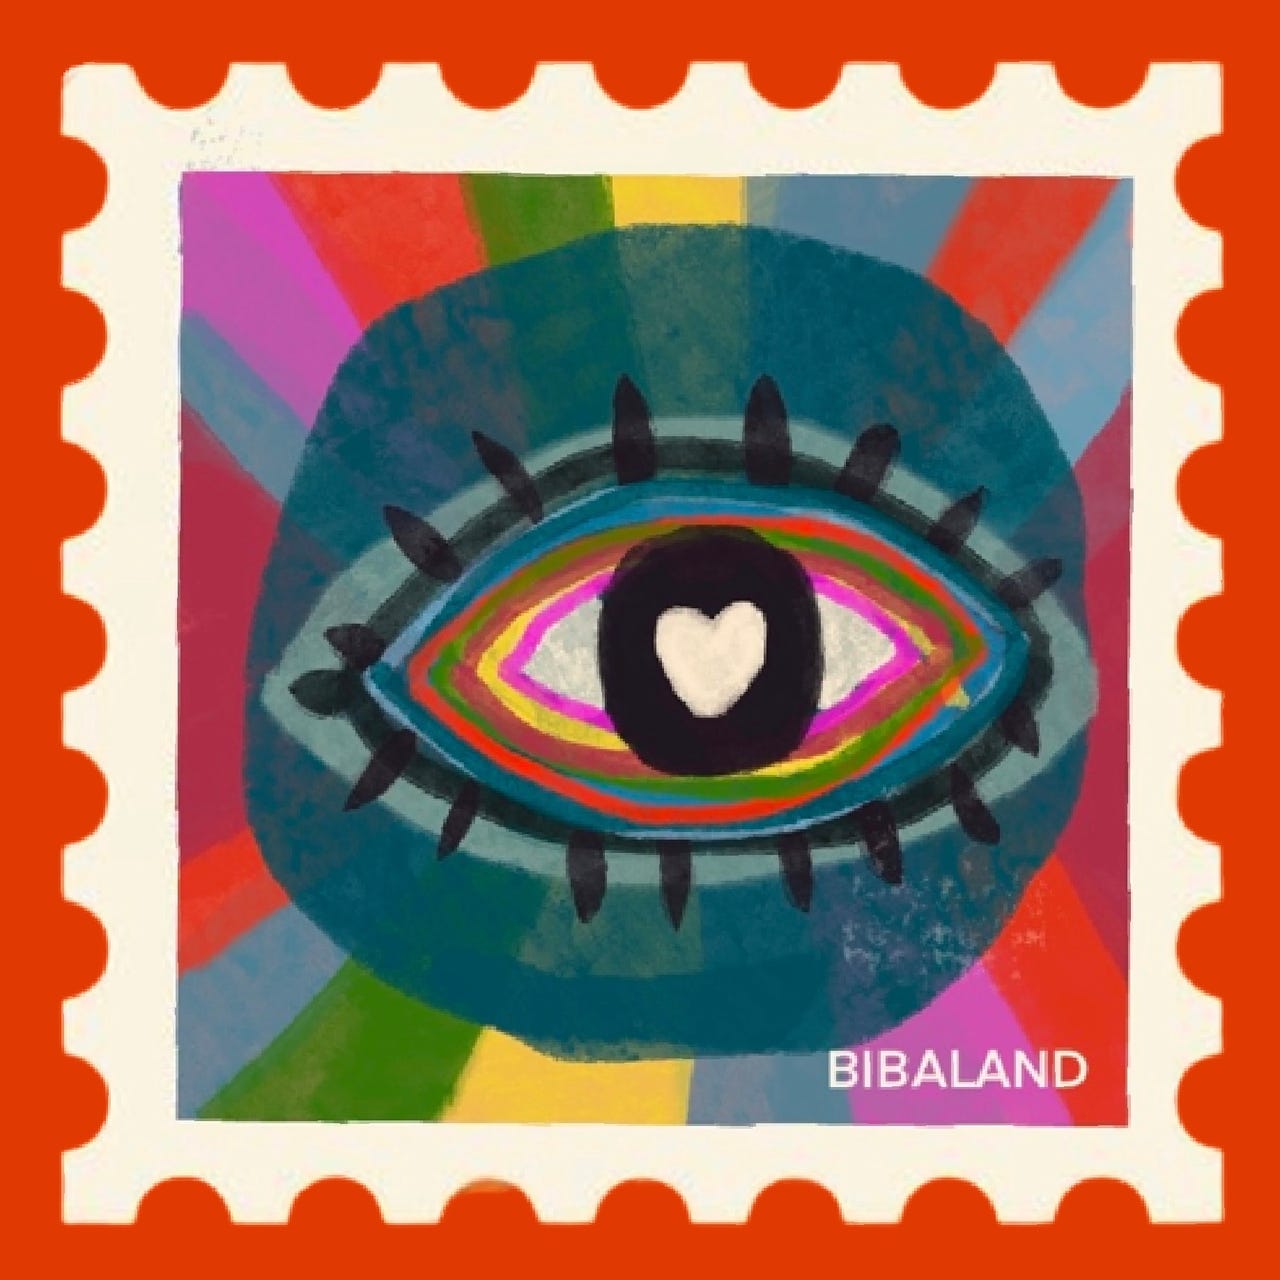 Postcards from Bibaland